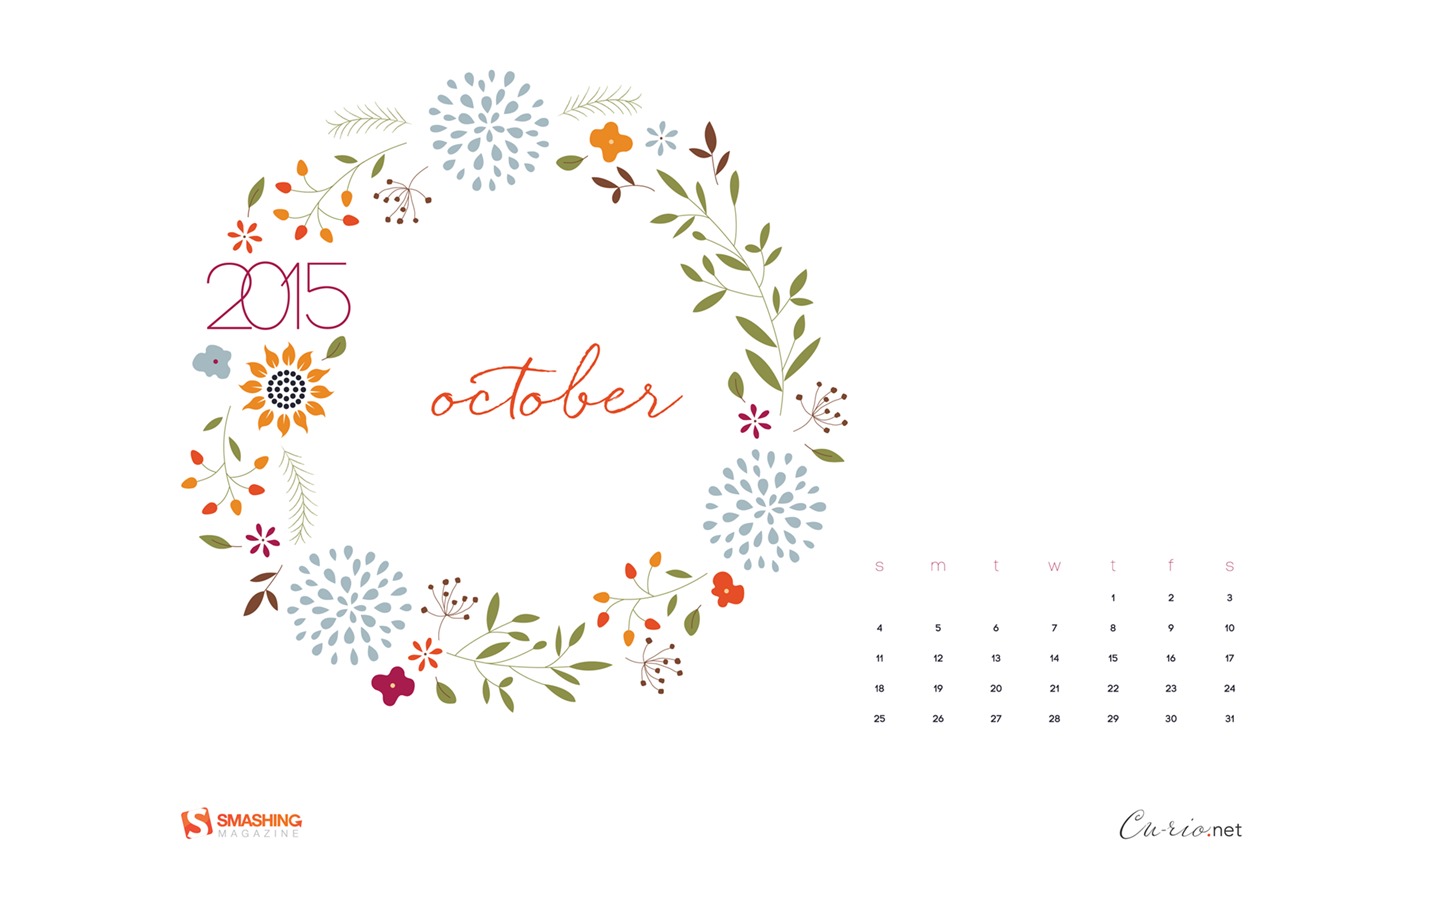 October 2015 calendar wallpaper (2) #11 - 1440x900